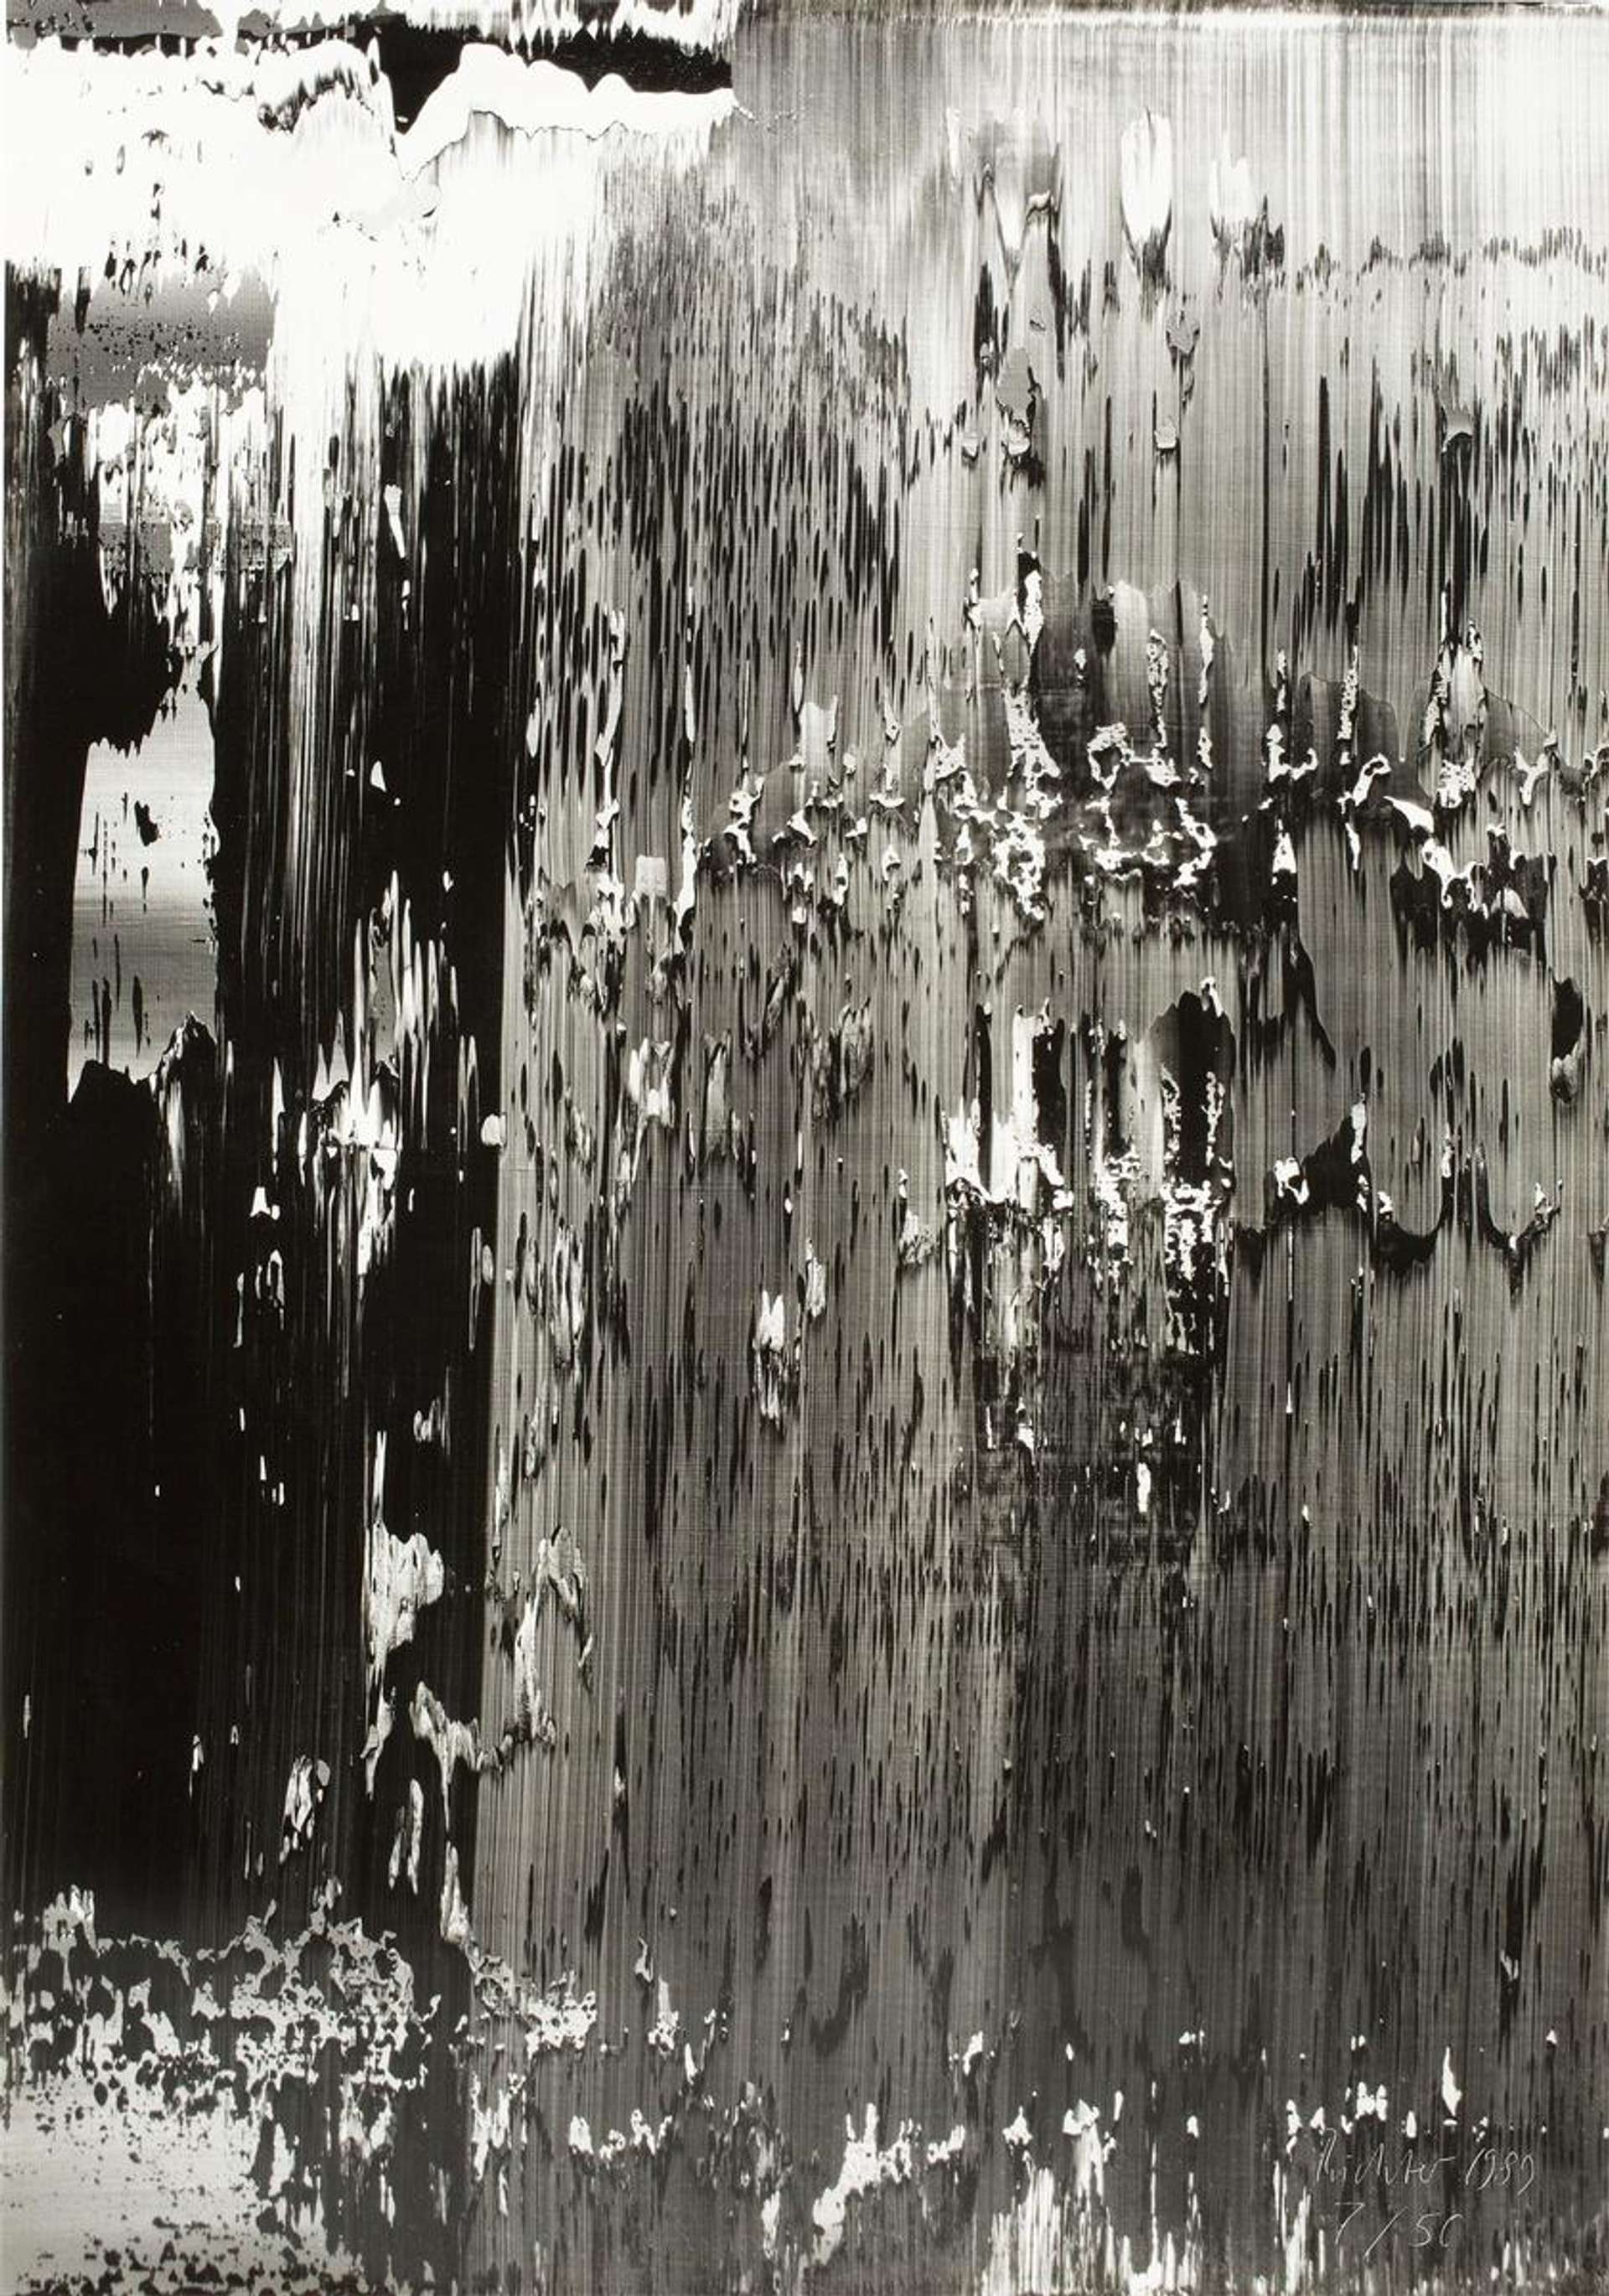 Gerhard Richter: Uran - Signed Print